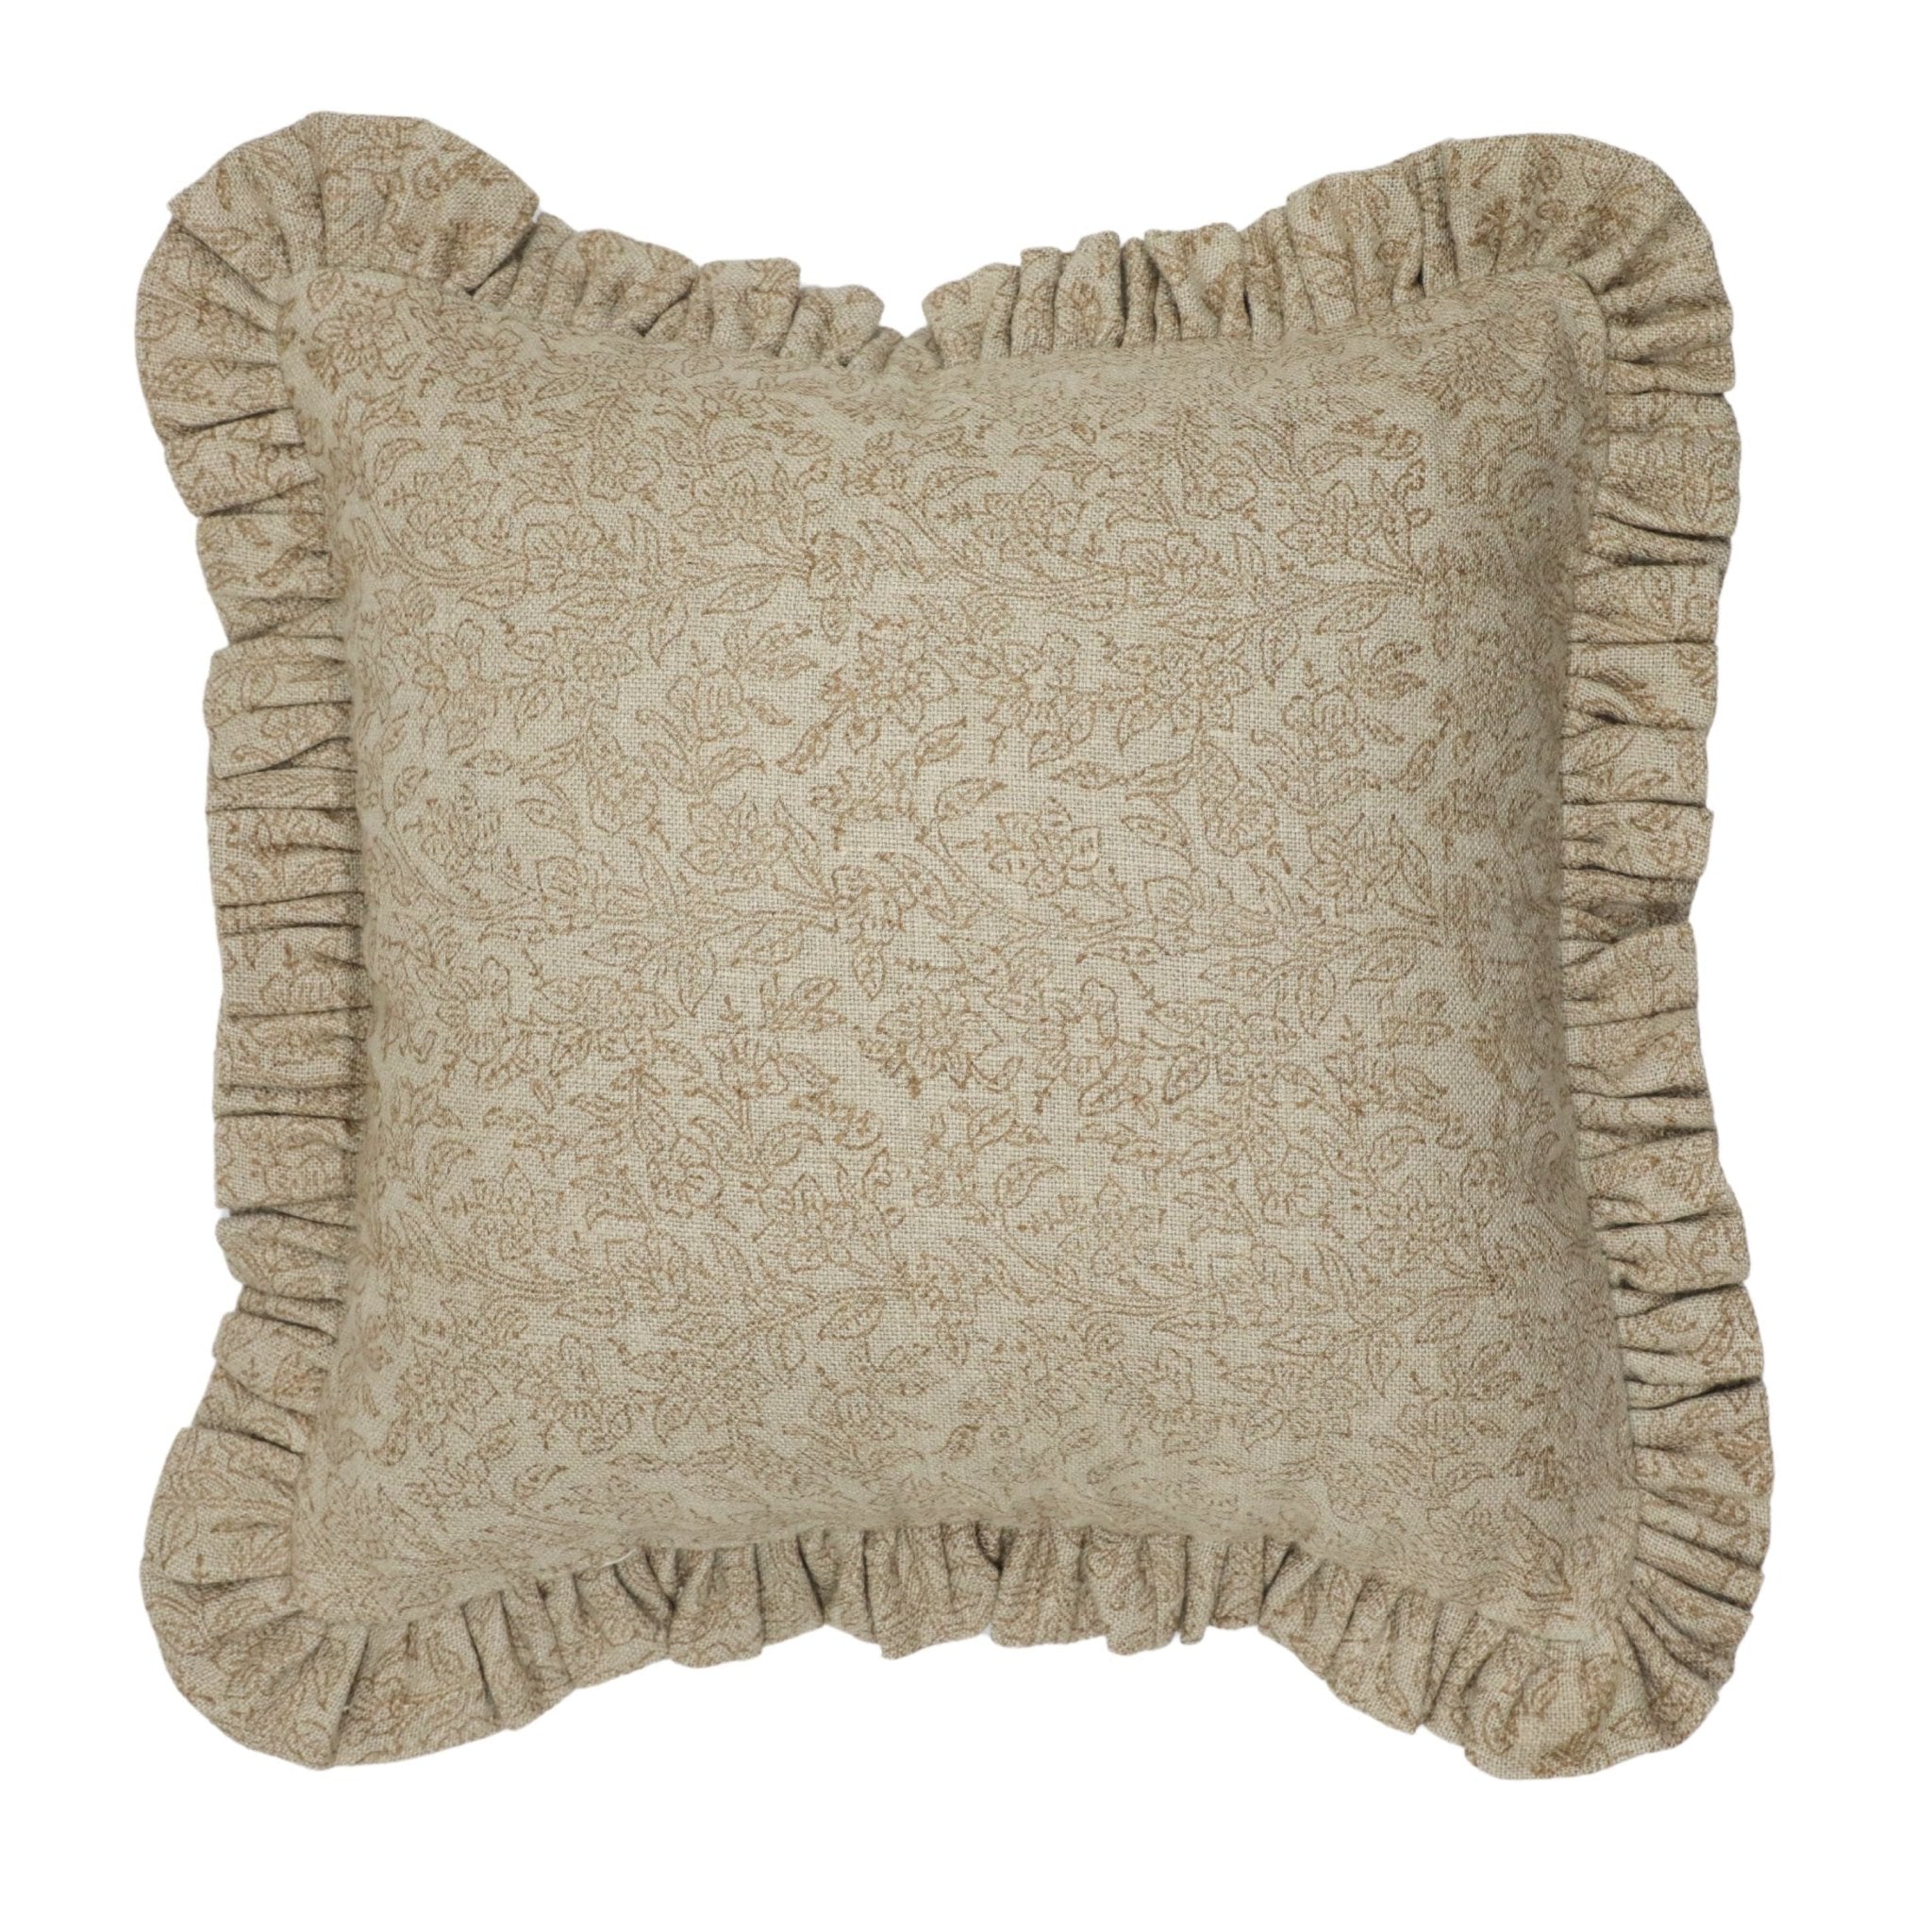 VISHV JAAL - Ruffle Pillow Cover - FABDIVINE LLCVISHV JAAL - Ruffle Pillow CoverTL Frill Pillow CoverFABDIVINE LLC